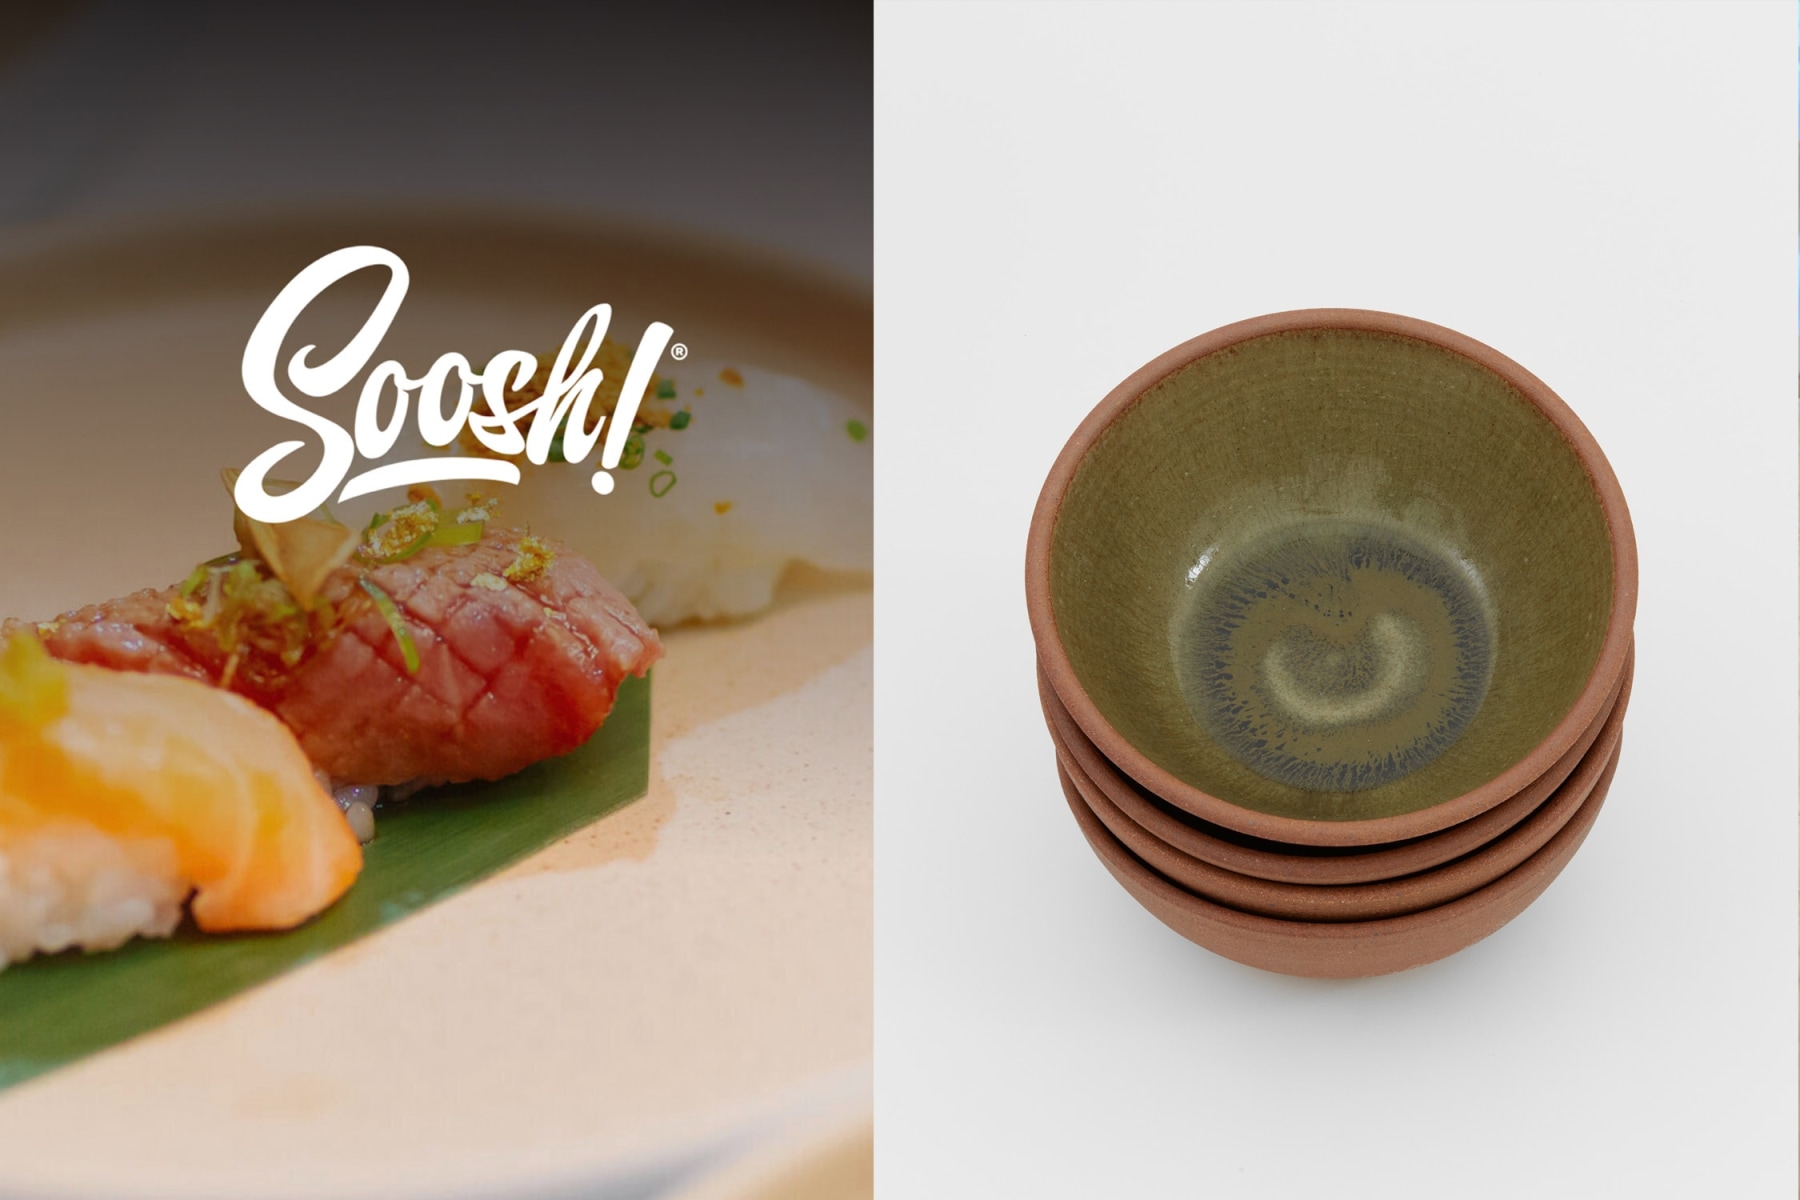 Soosh dinner and Shoshi Watanabe Ceramic Bowls